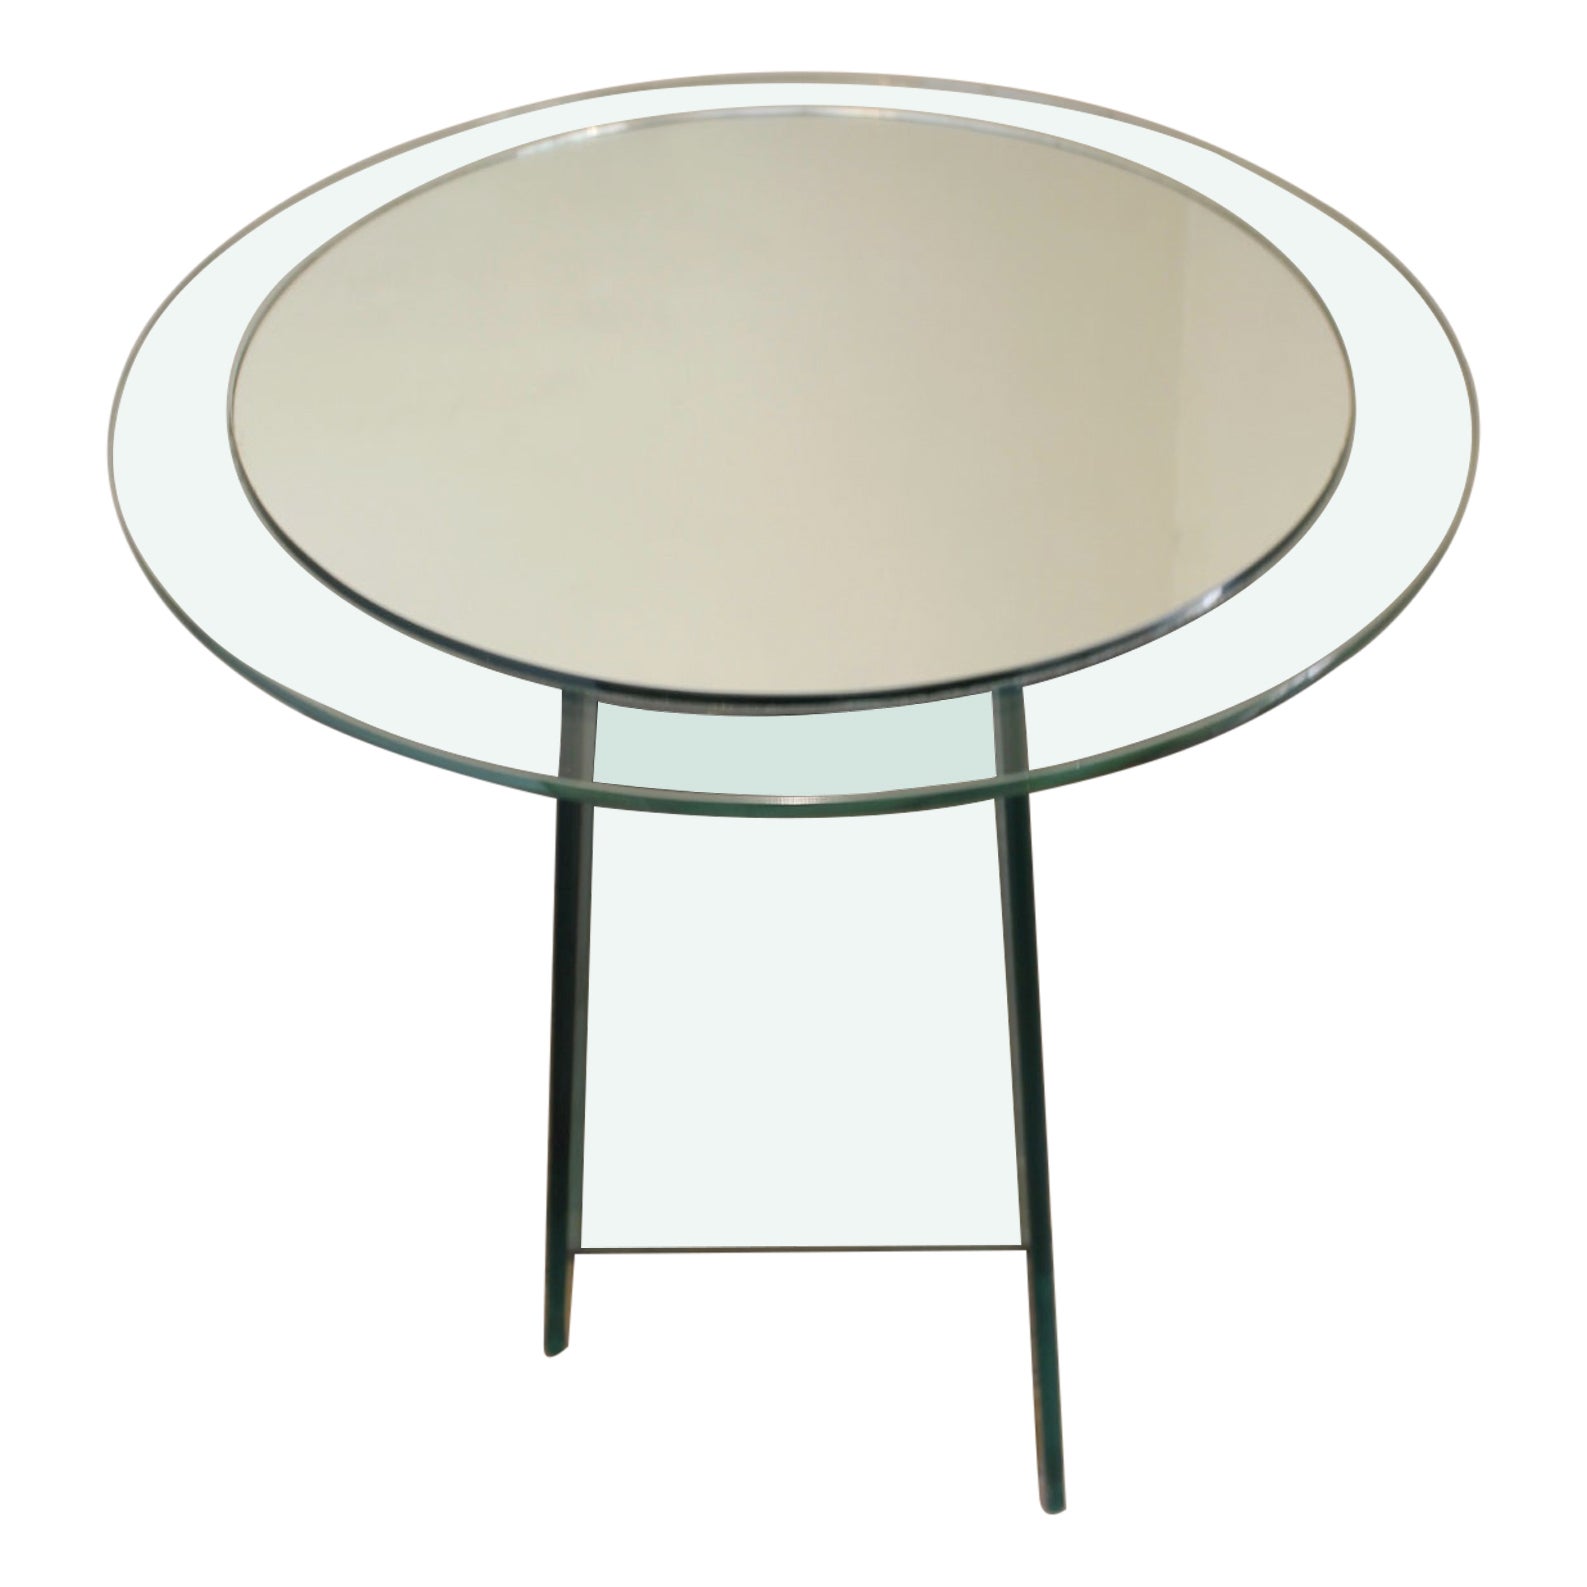 Glass and mirror pedestal table, asymmetrical, Fontana Arte style, 1970